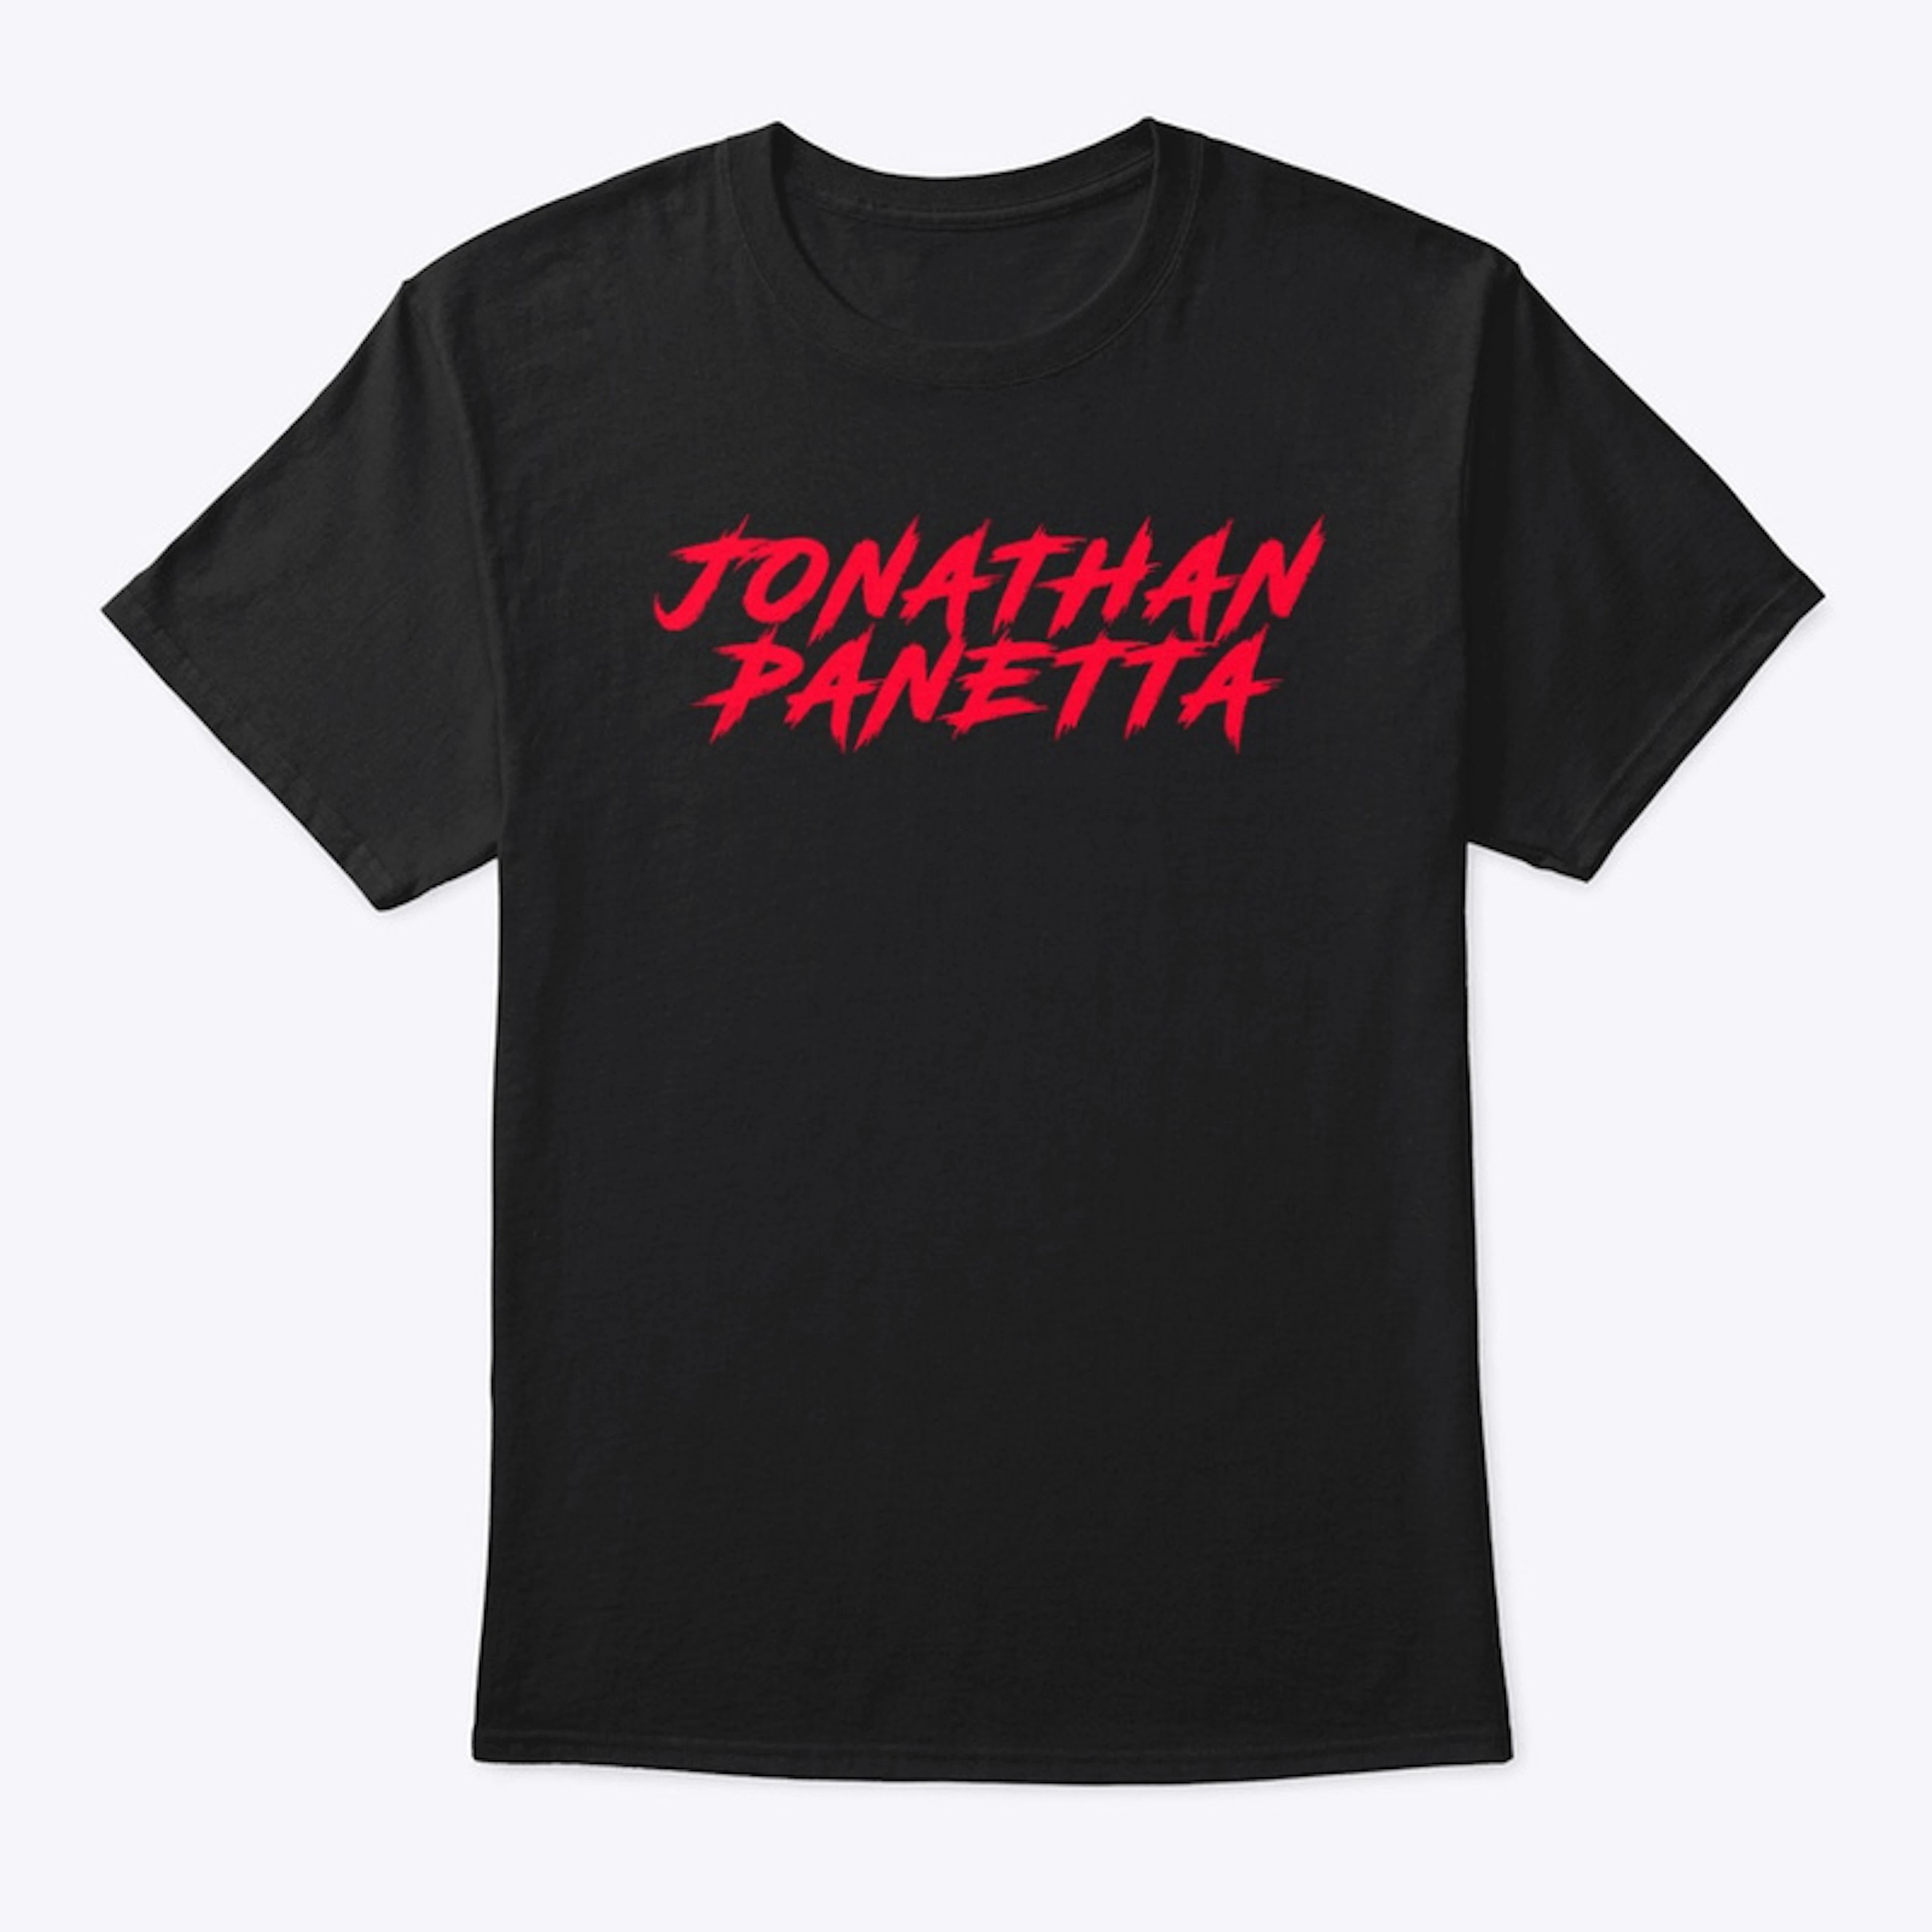 Jonathan Panetta Red logo T Shirt